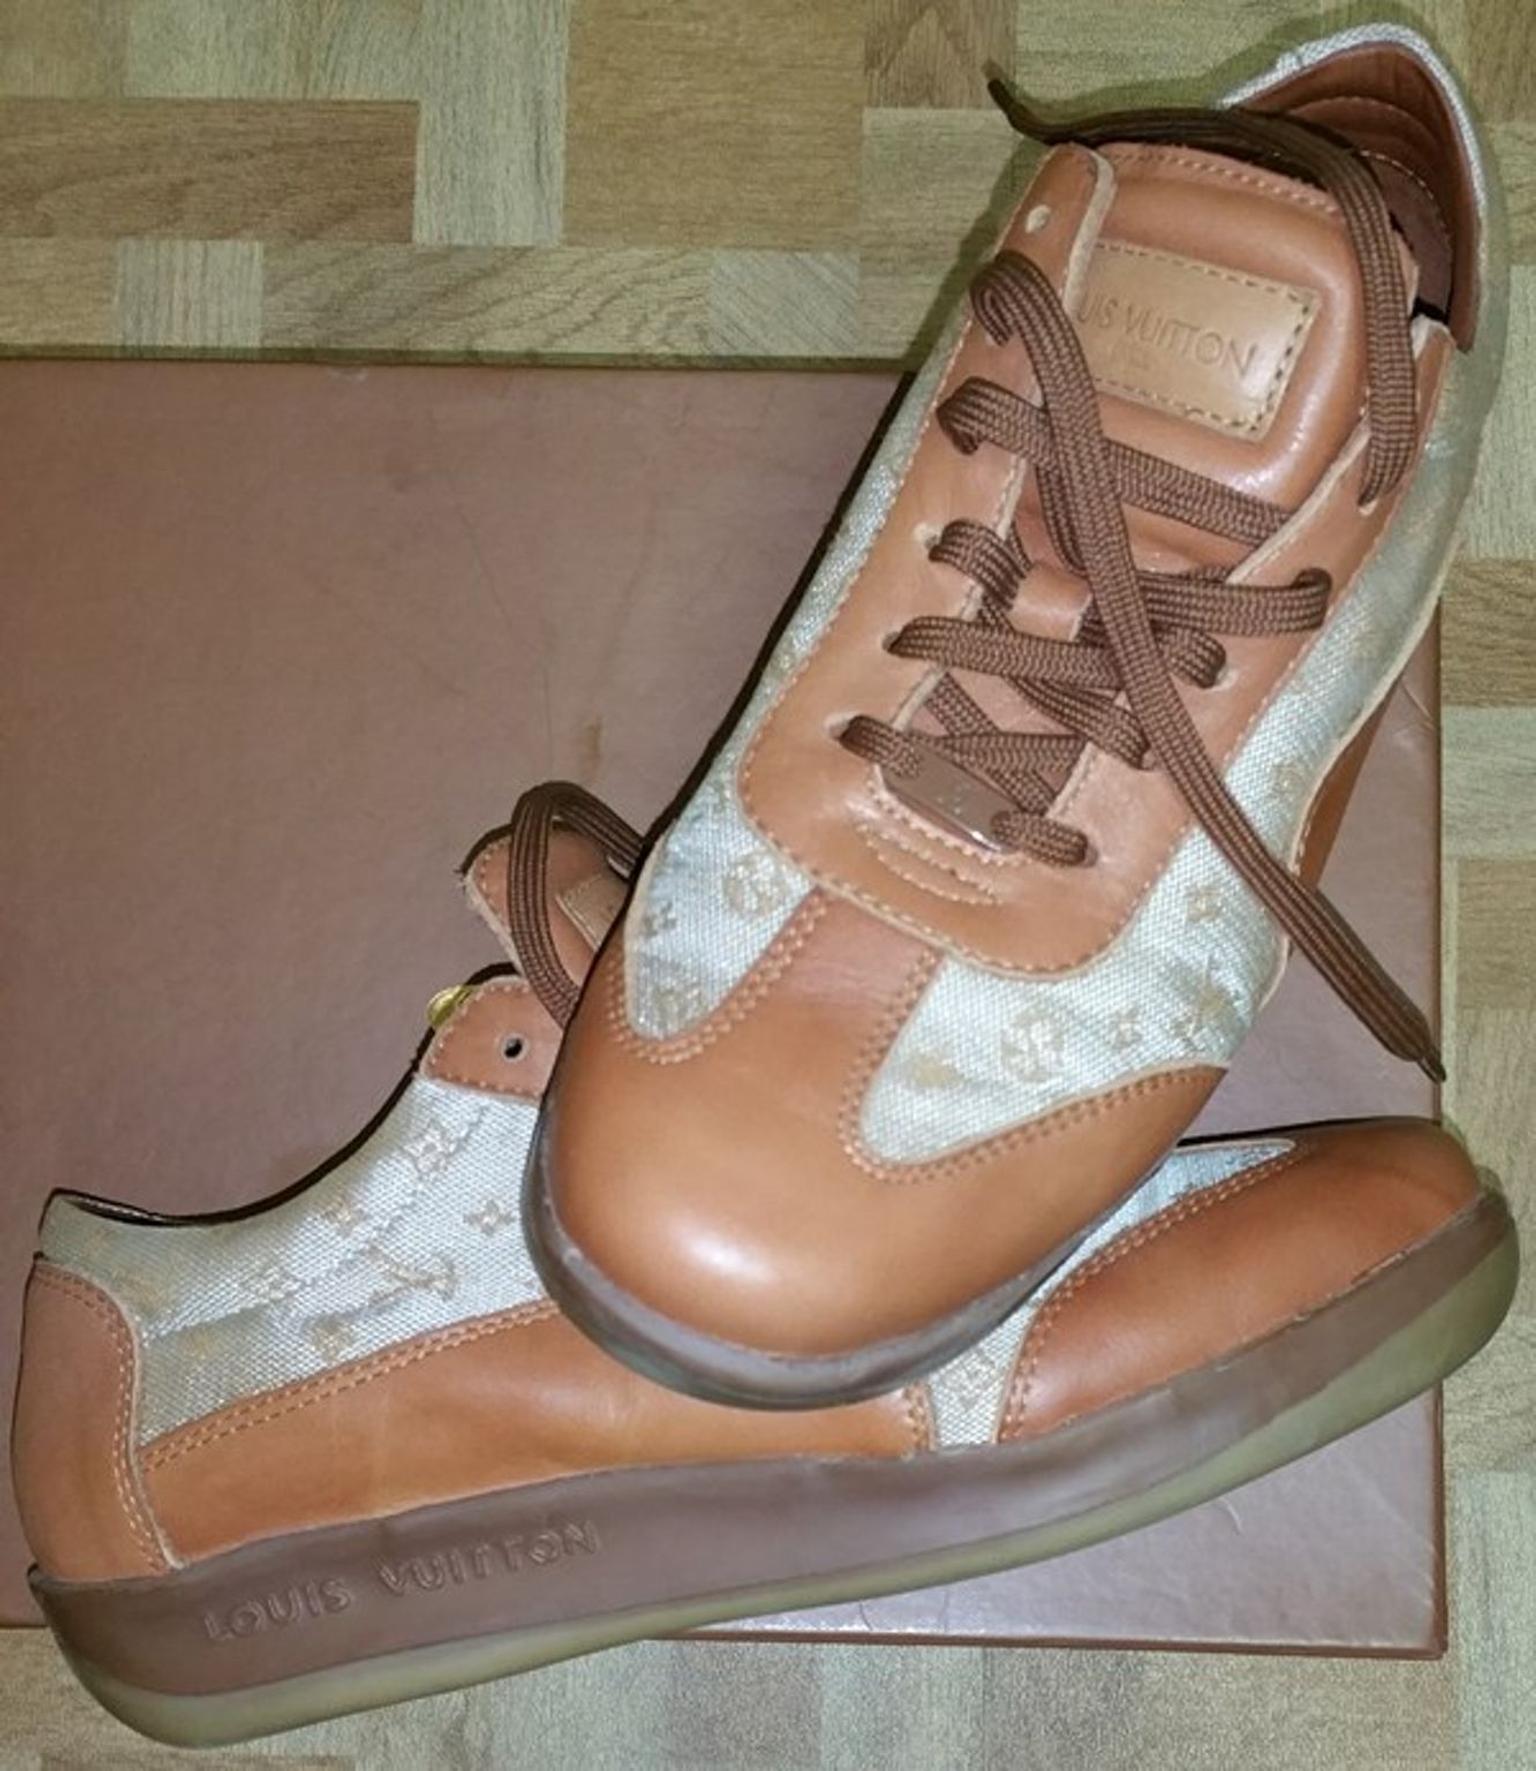 Louis Vuitton Original Damen Schuhe Sneakers In Ingolstadt For 0 00 For Sale Shpock